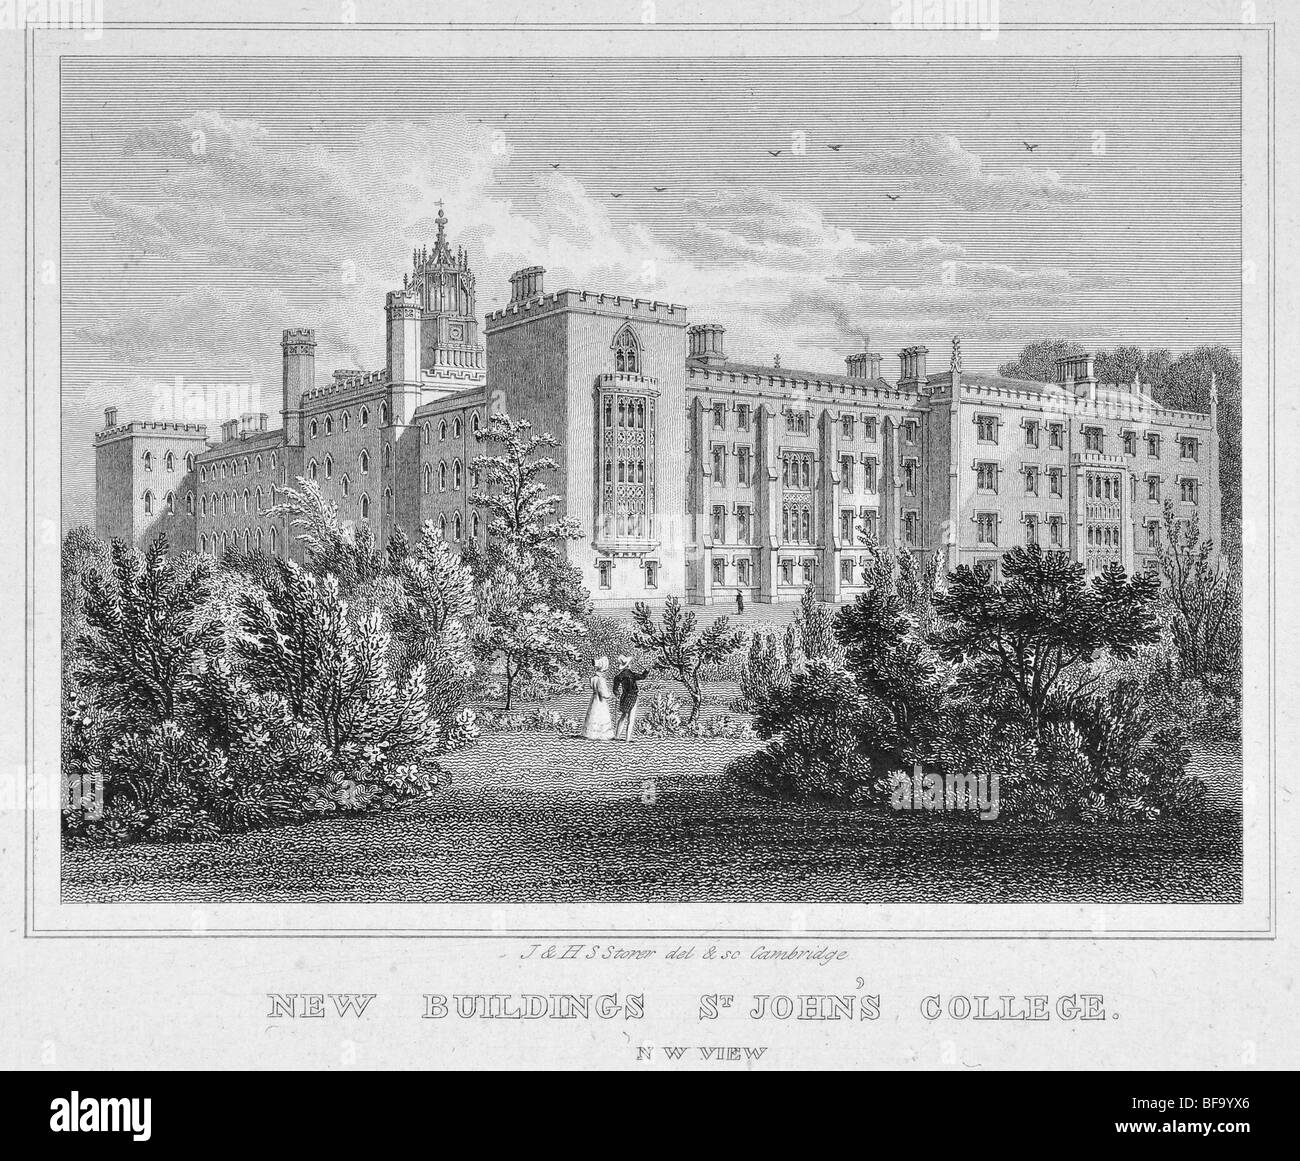 St John's College, Cambridge - Nuevos edificios, N-W ver Foto de stock